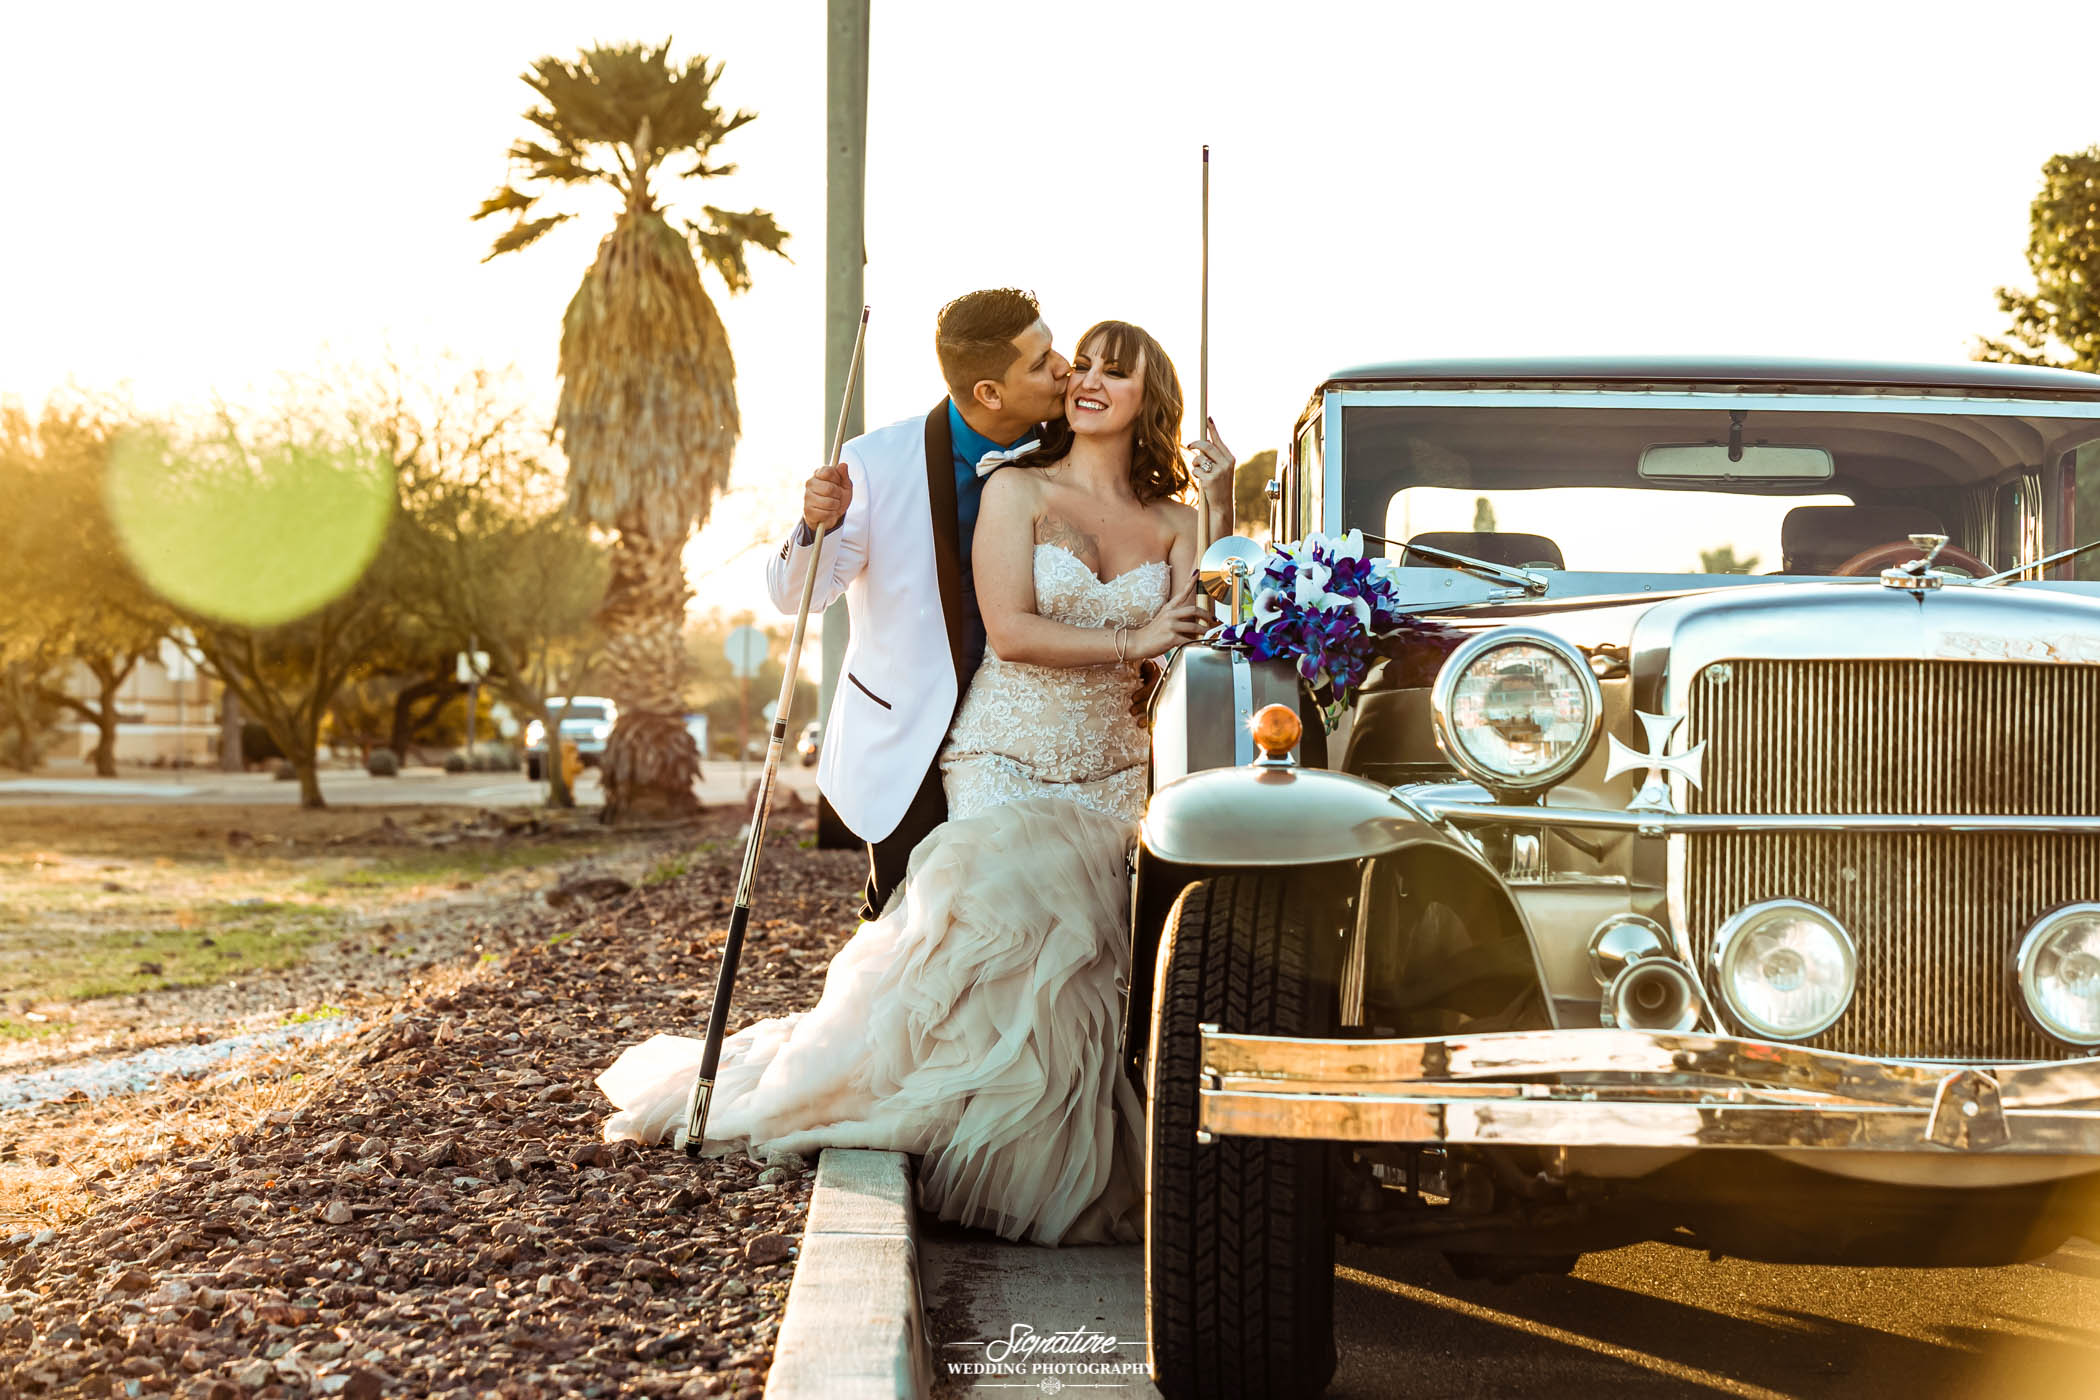 Groom kissing bride on cheek outside vintage car with pool sticks